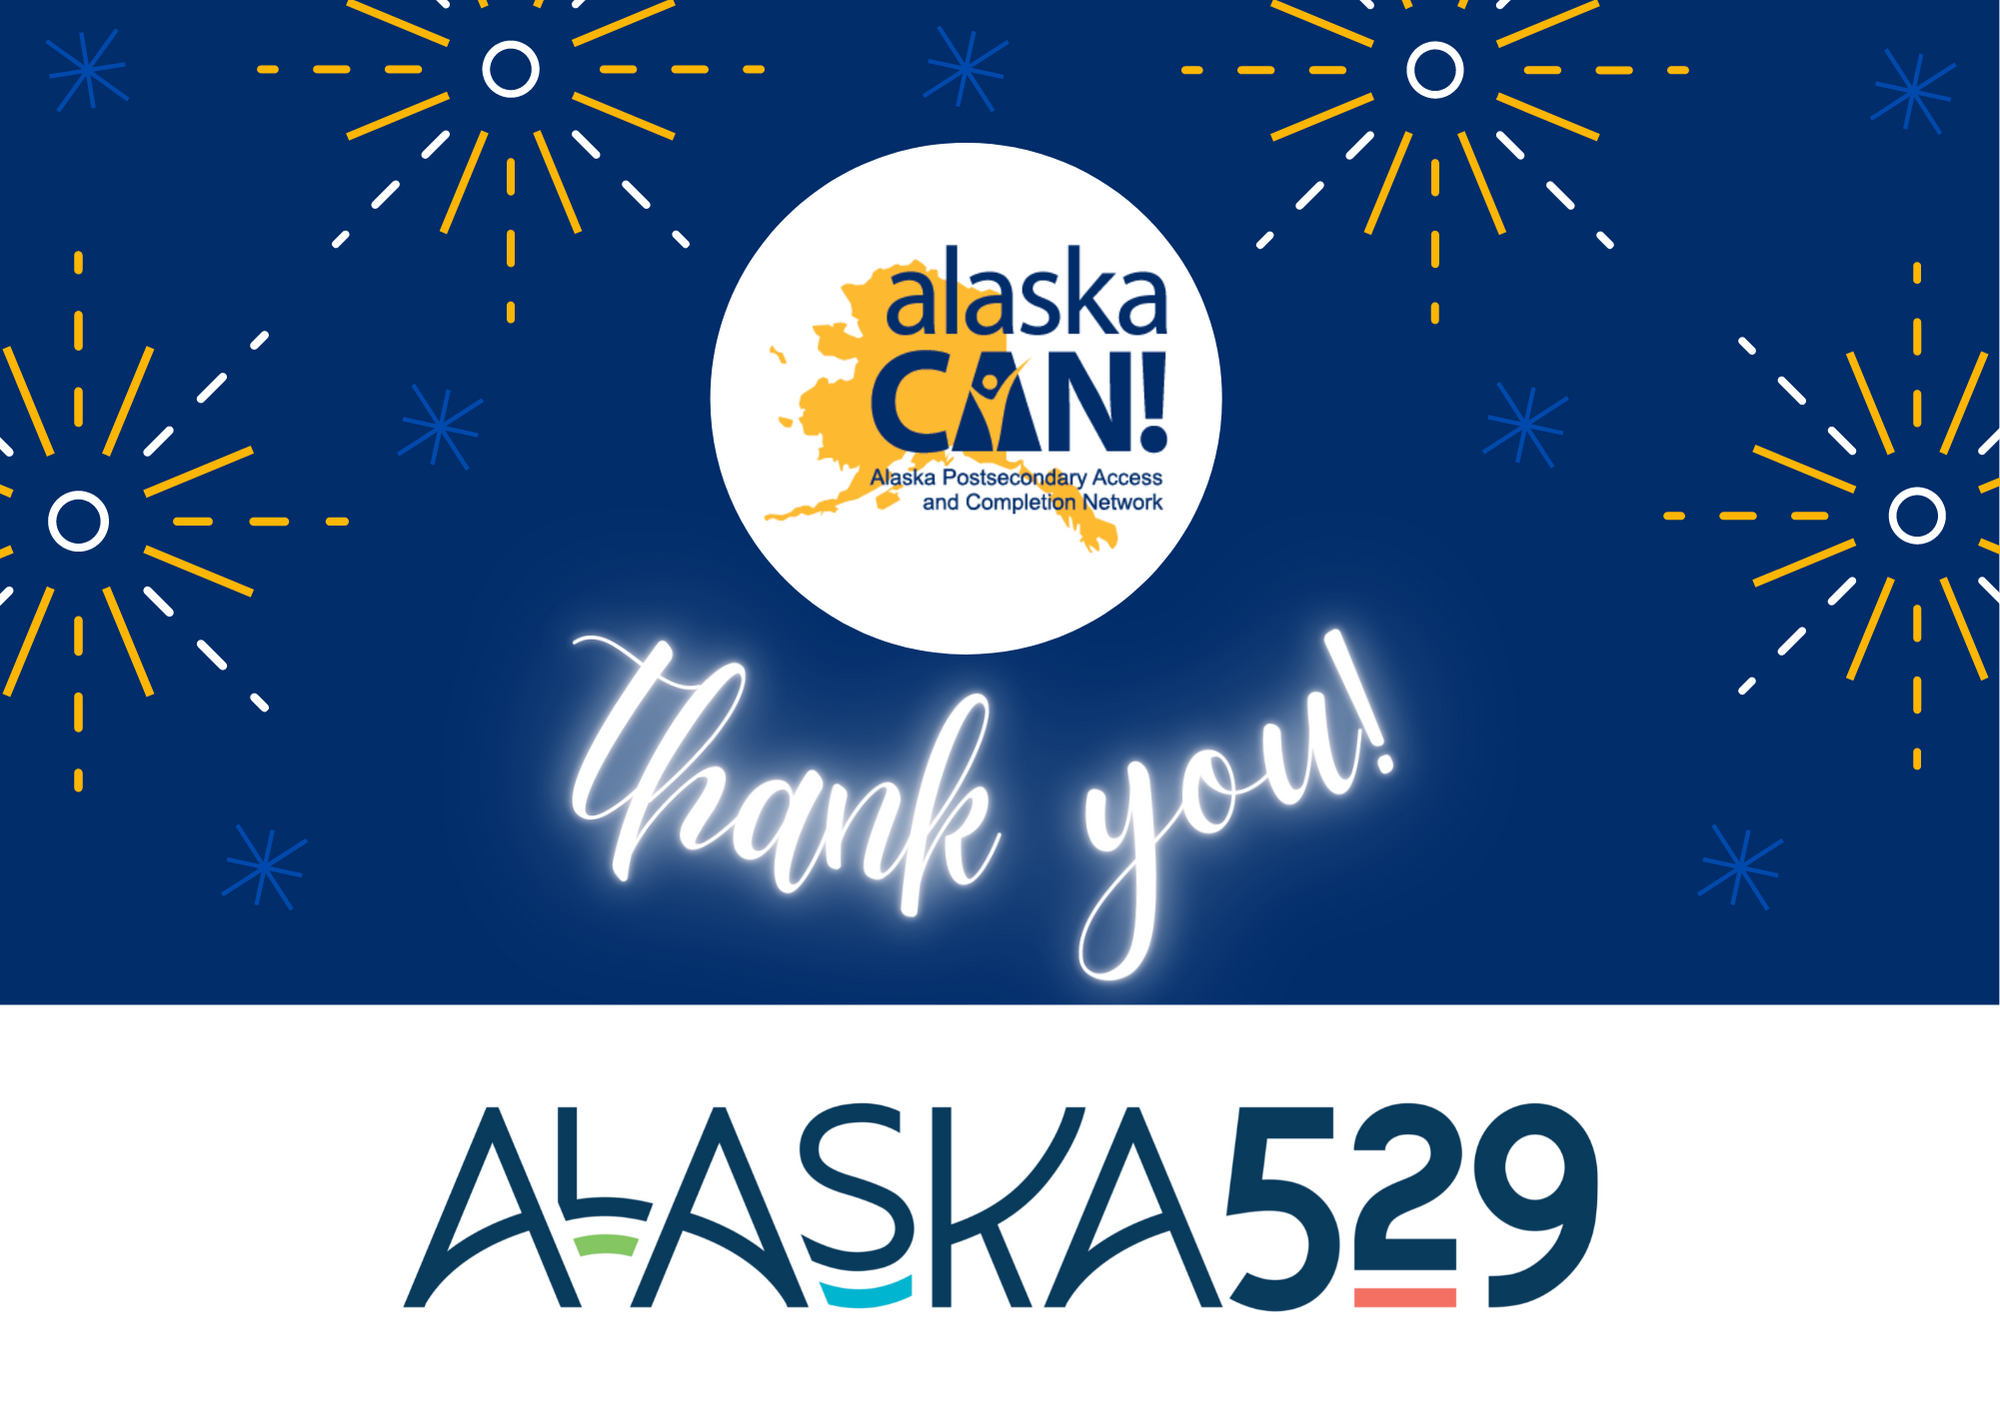 Thank you Alaska Safety Network